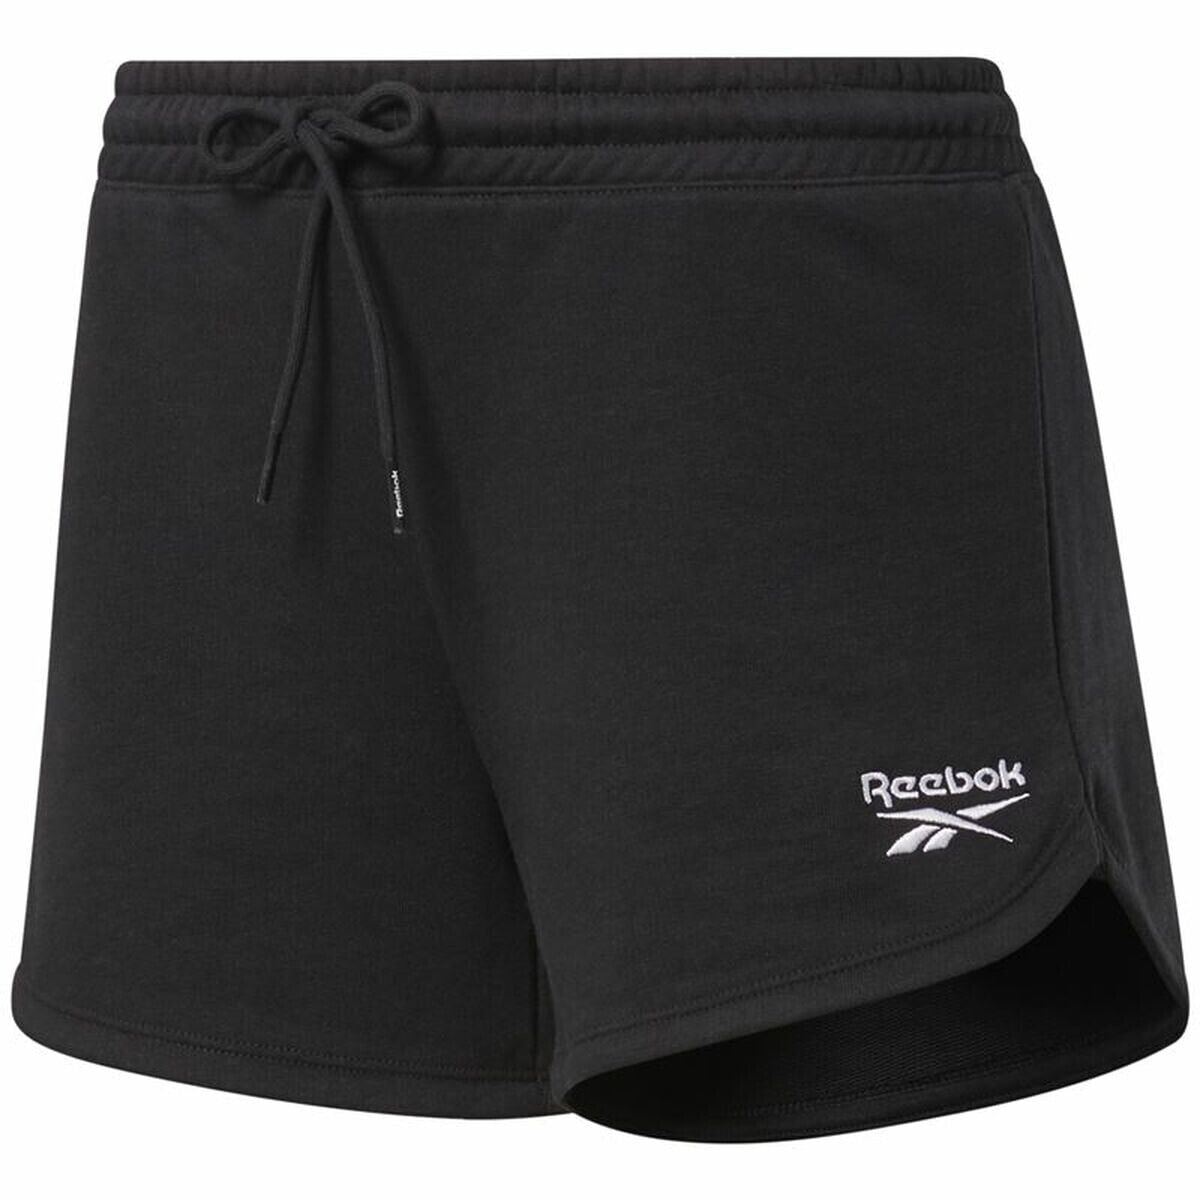 Sports Shorts for Women Reebok Identity Black